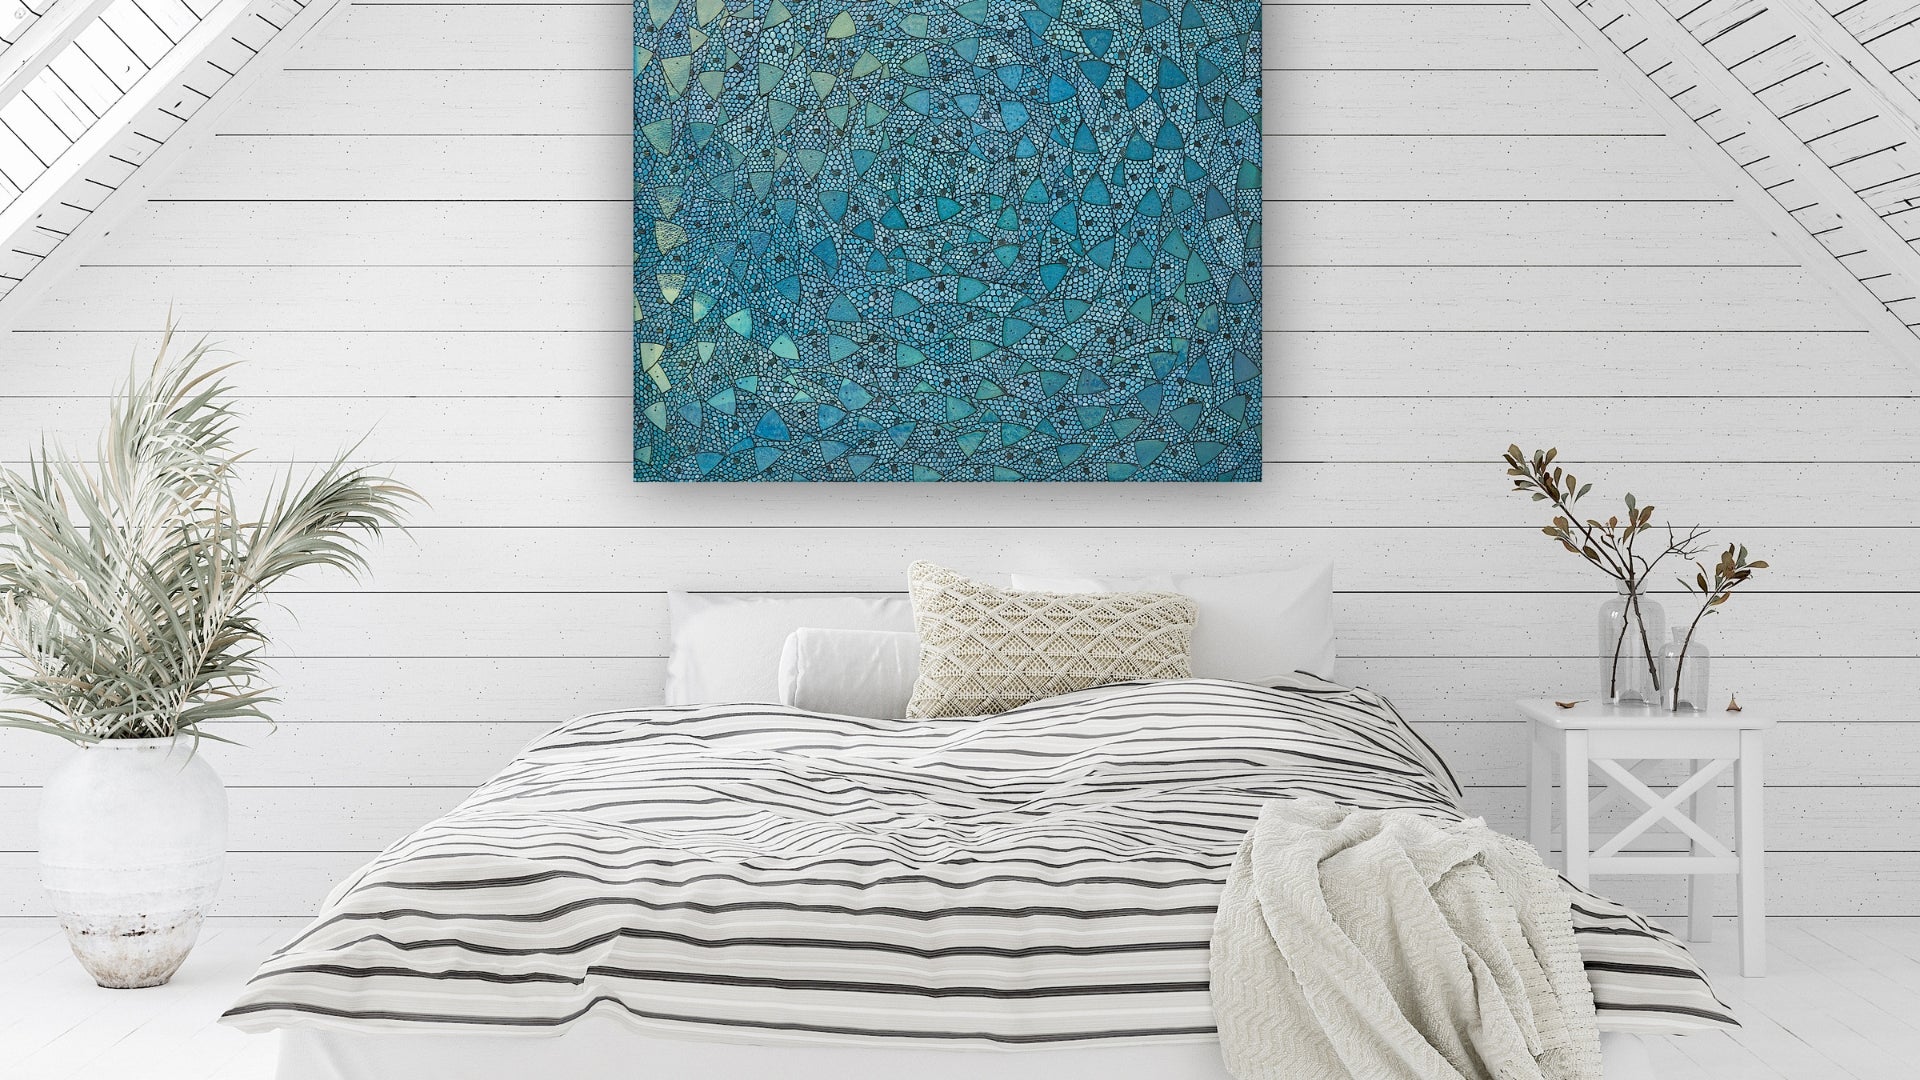 Blue Sardines, an oil on canvas original painting by Seth B Minkin